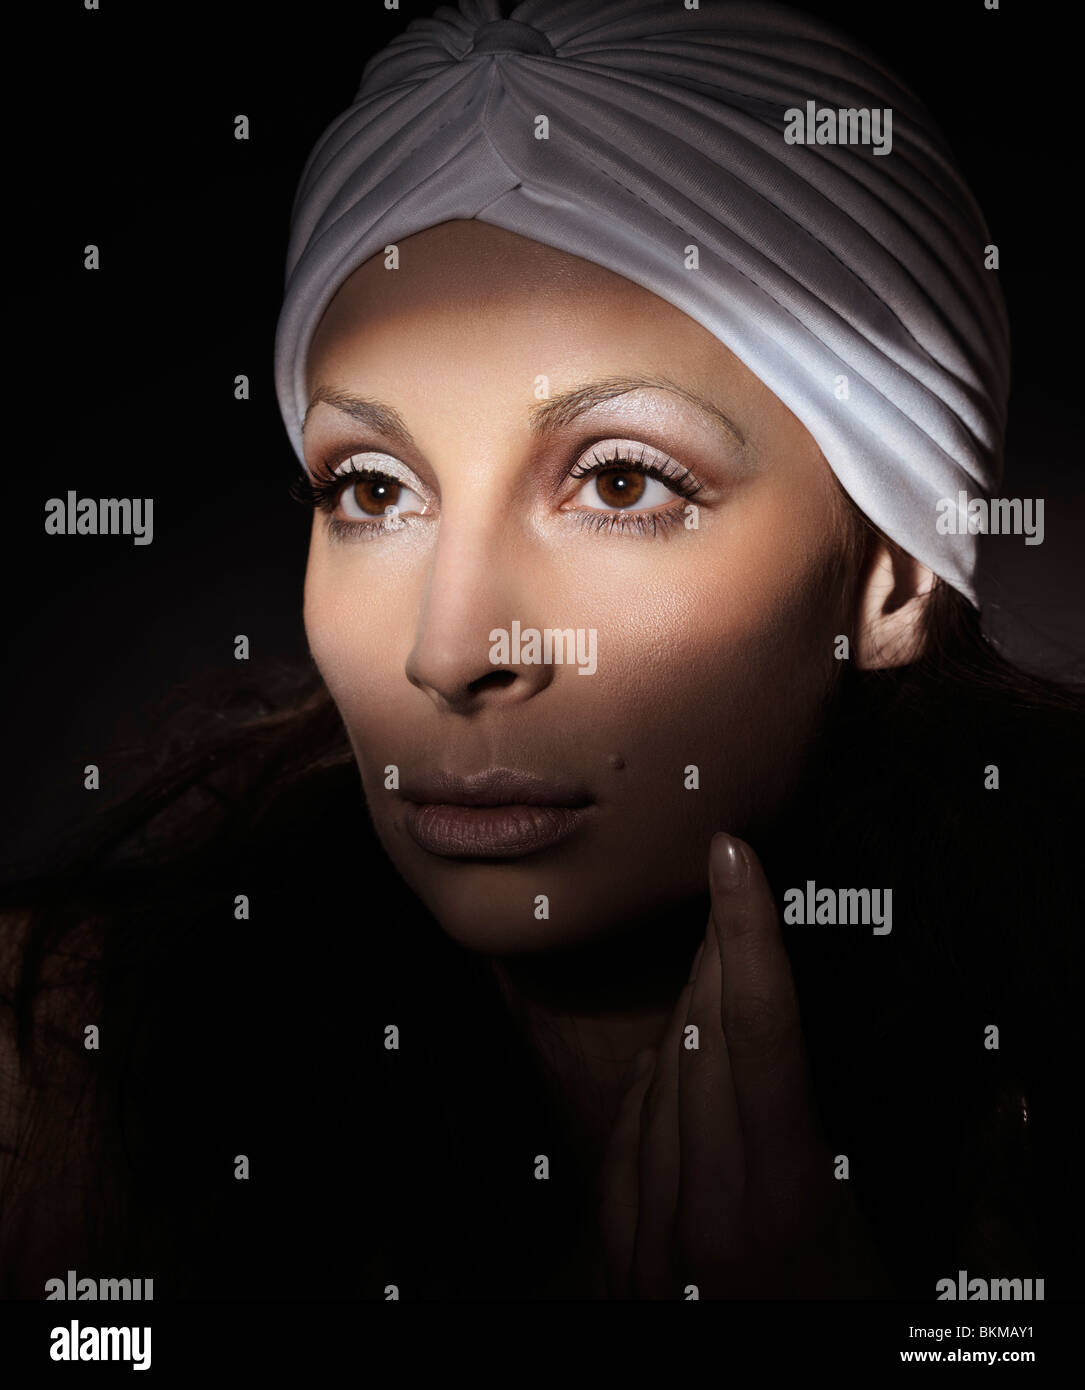 Light falling on a beautiful woman face artistic portrait Stock Photo